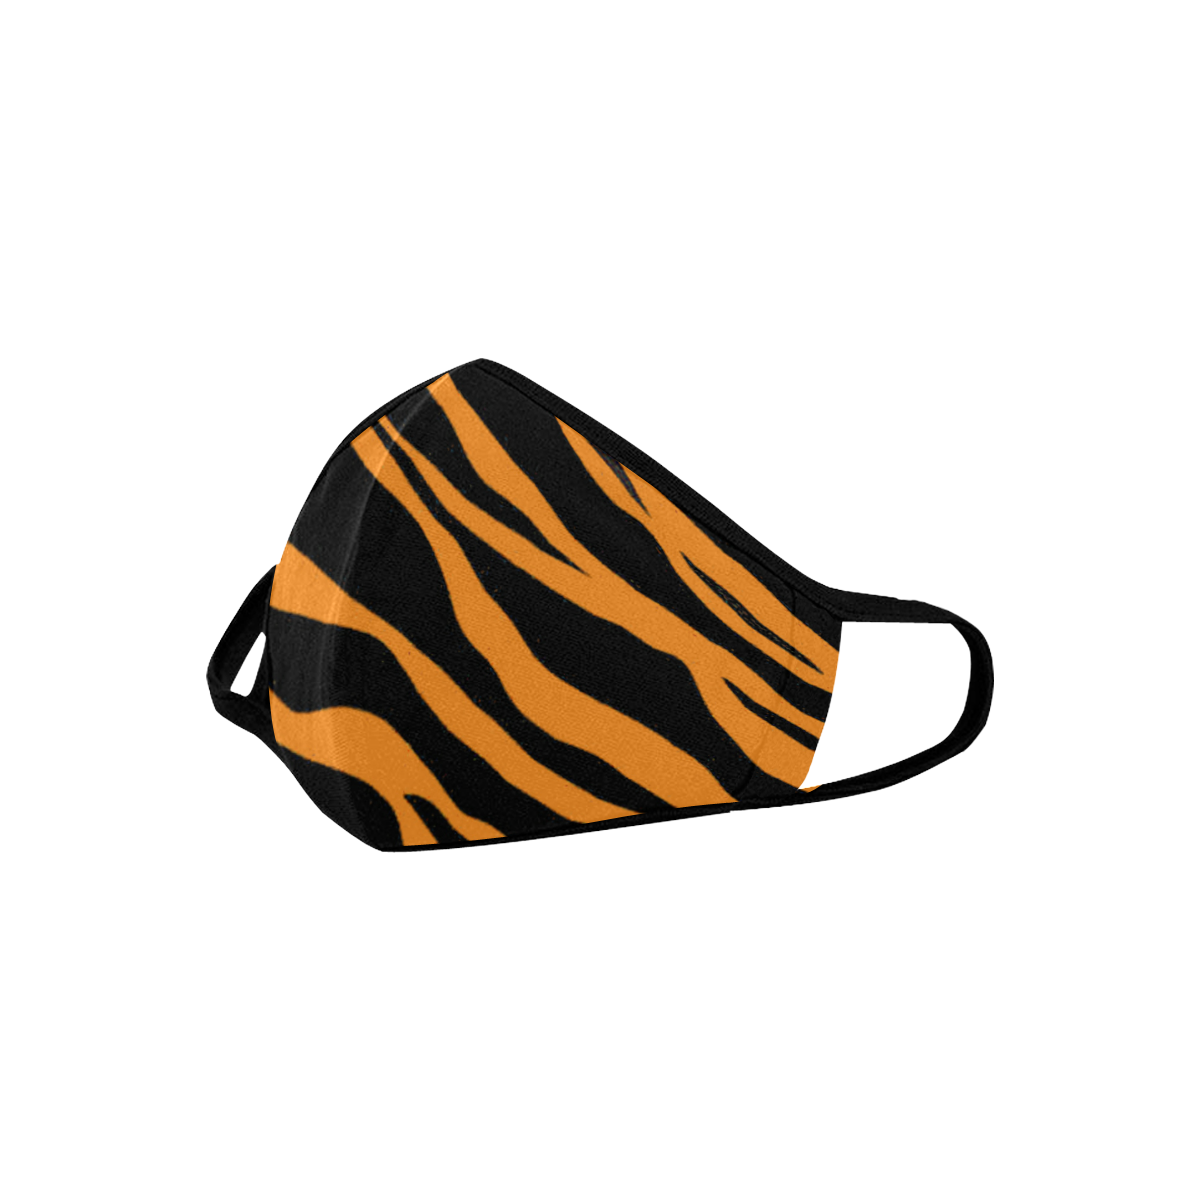 Orange Zebra Stripes Mouth Mask